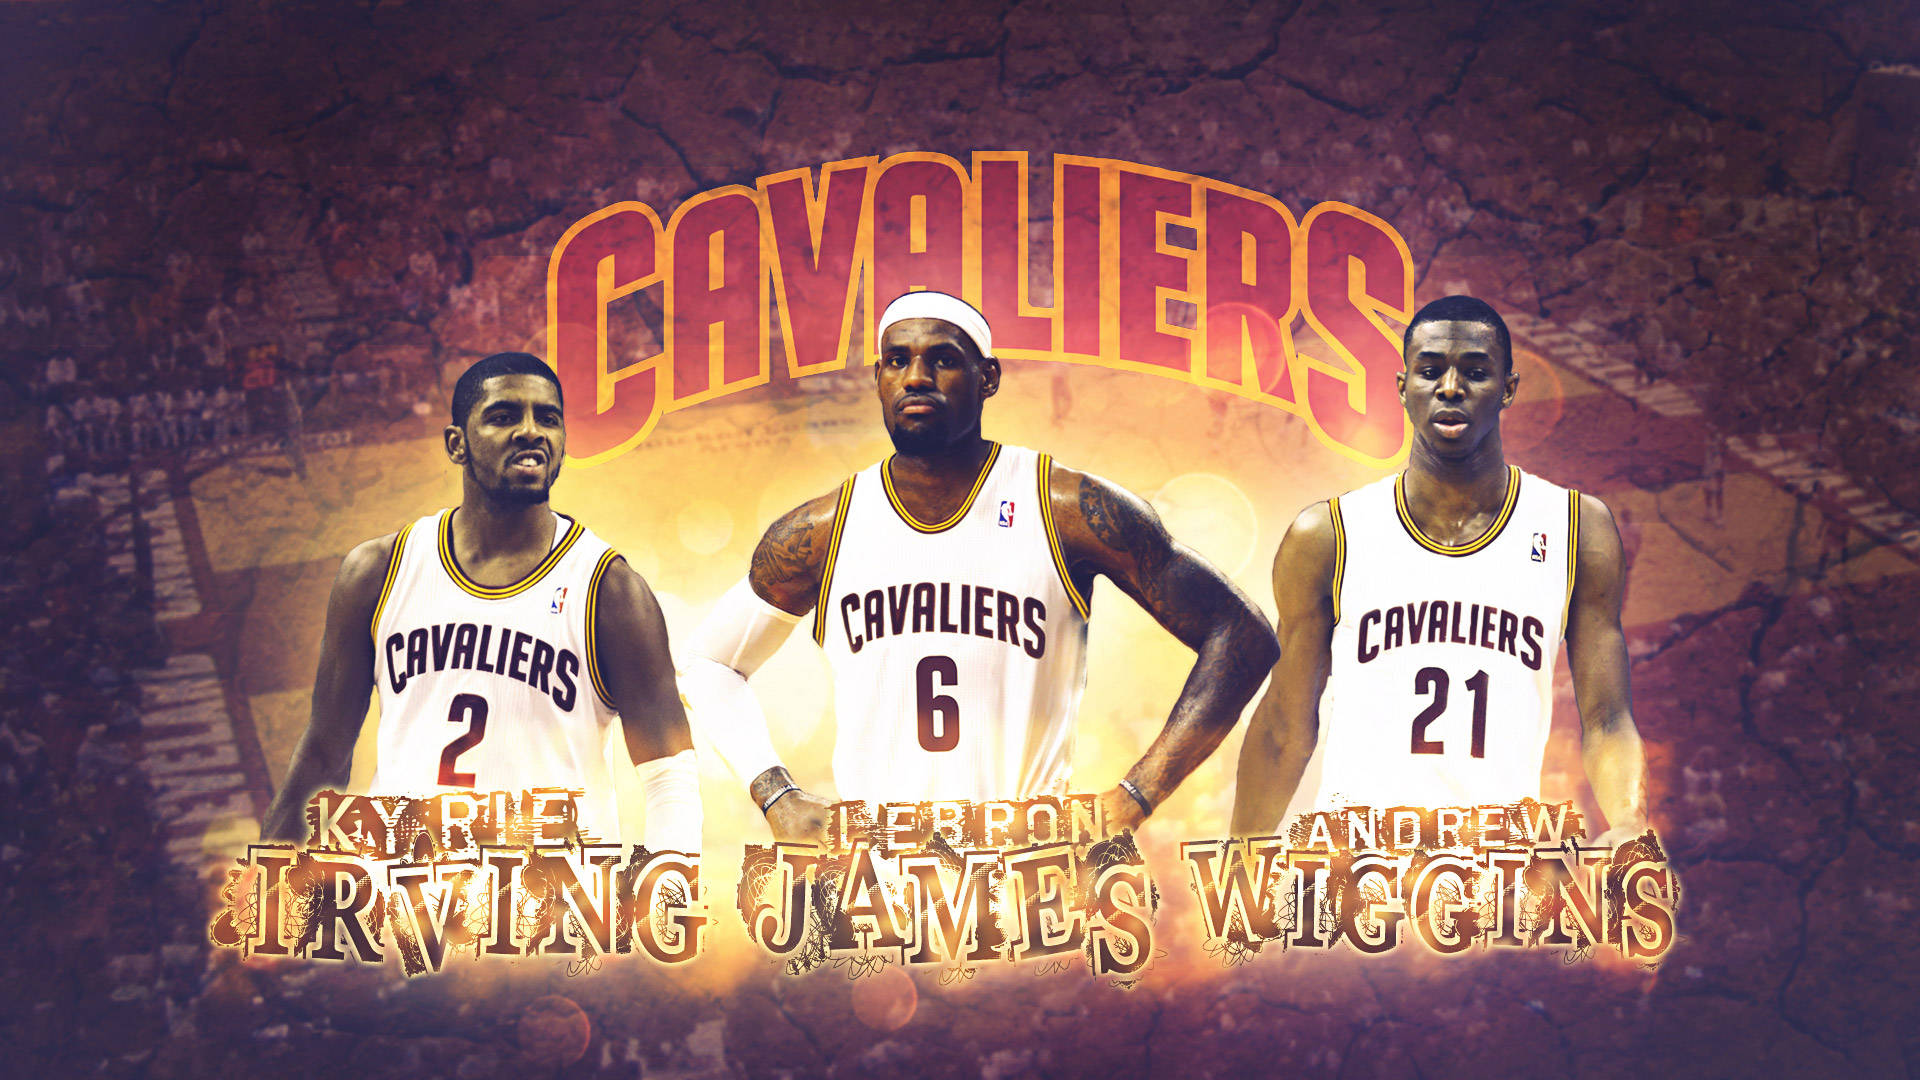 Cleveland Cavaliers Basketball Team Wallpaper